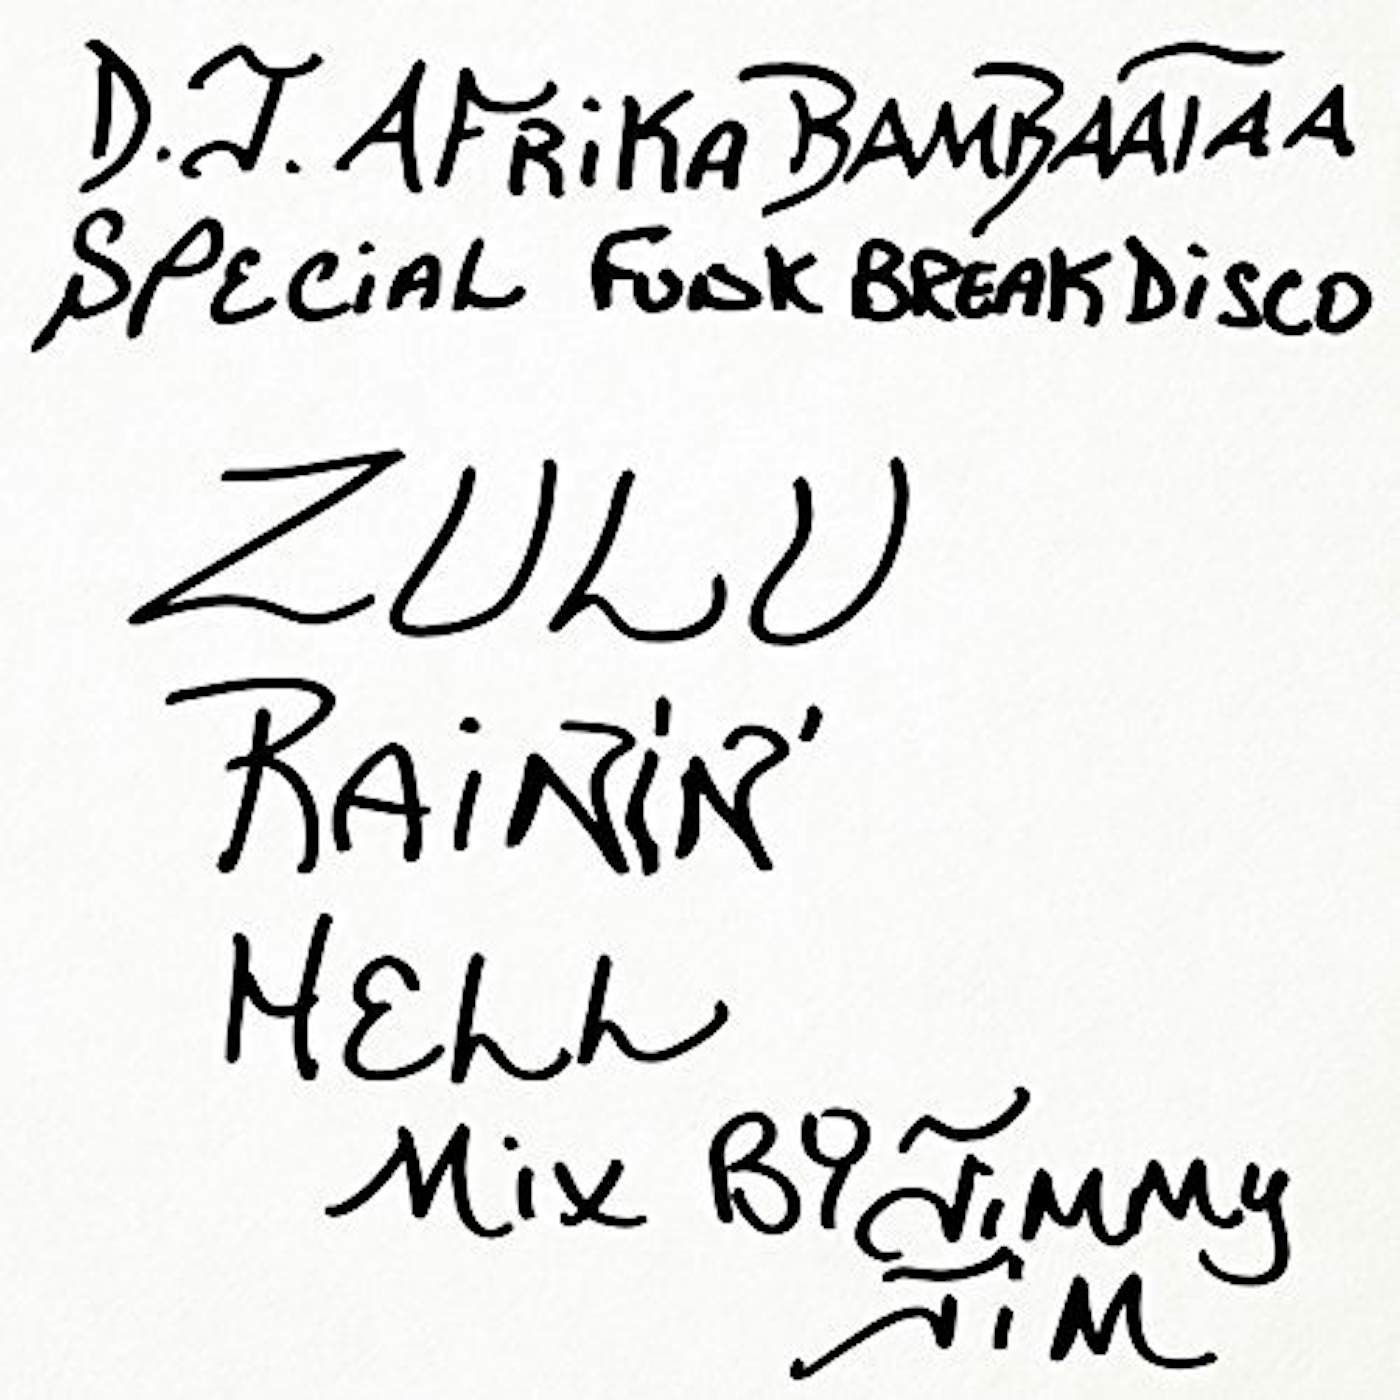 Jimmy Jim ZULU RAIN' HELL MIX Vinyl Record